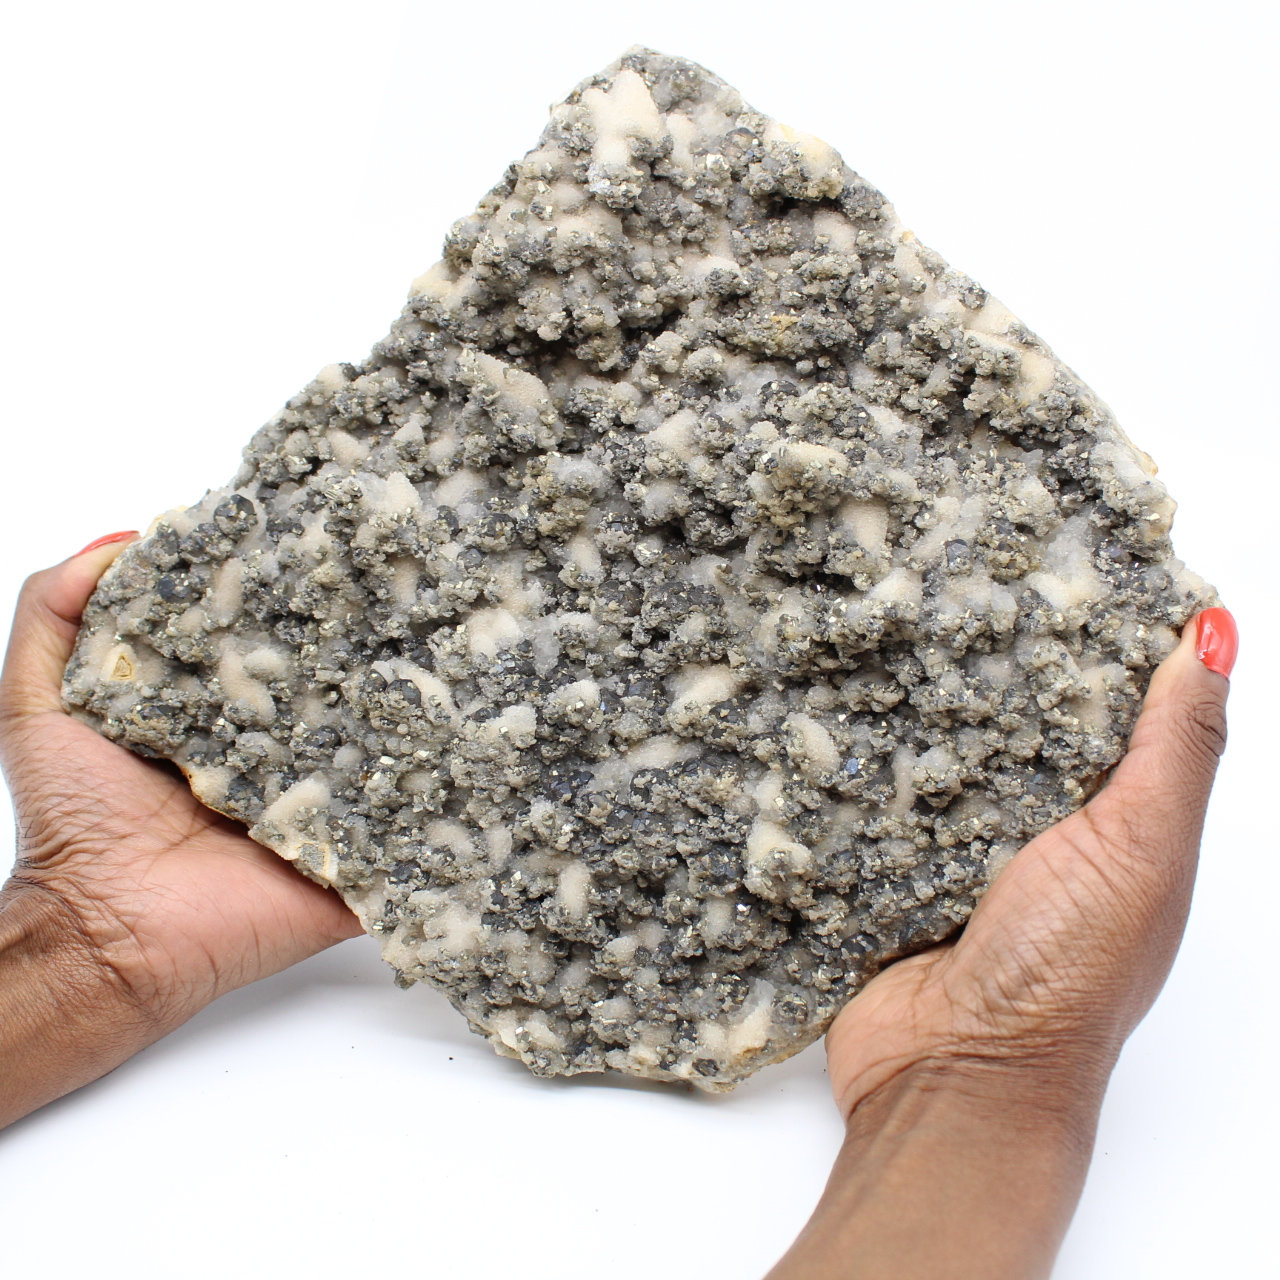 Large quartz slab with crystals of pyrite and sphalerite (blende)